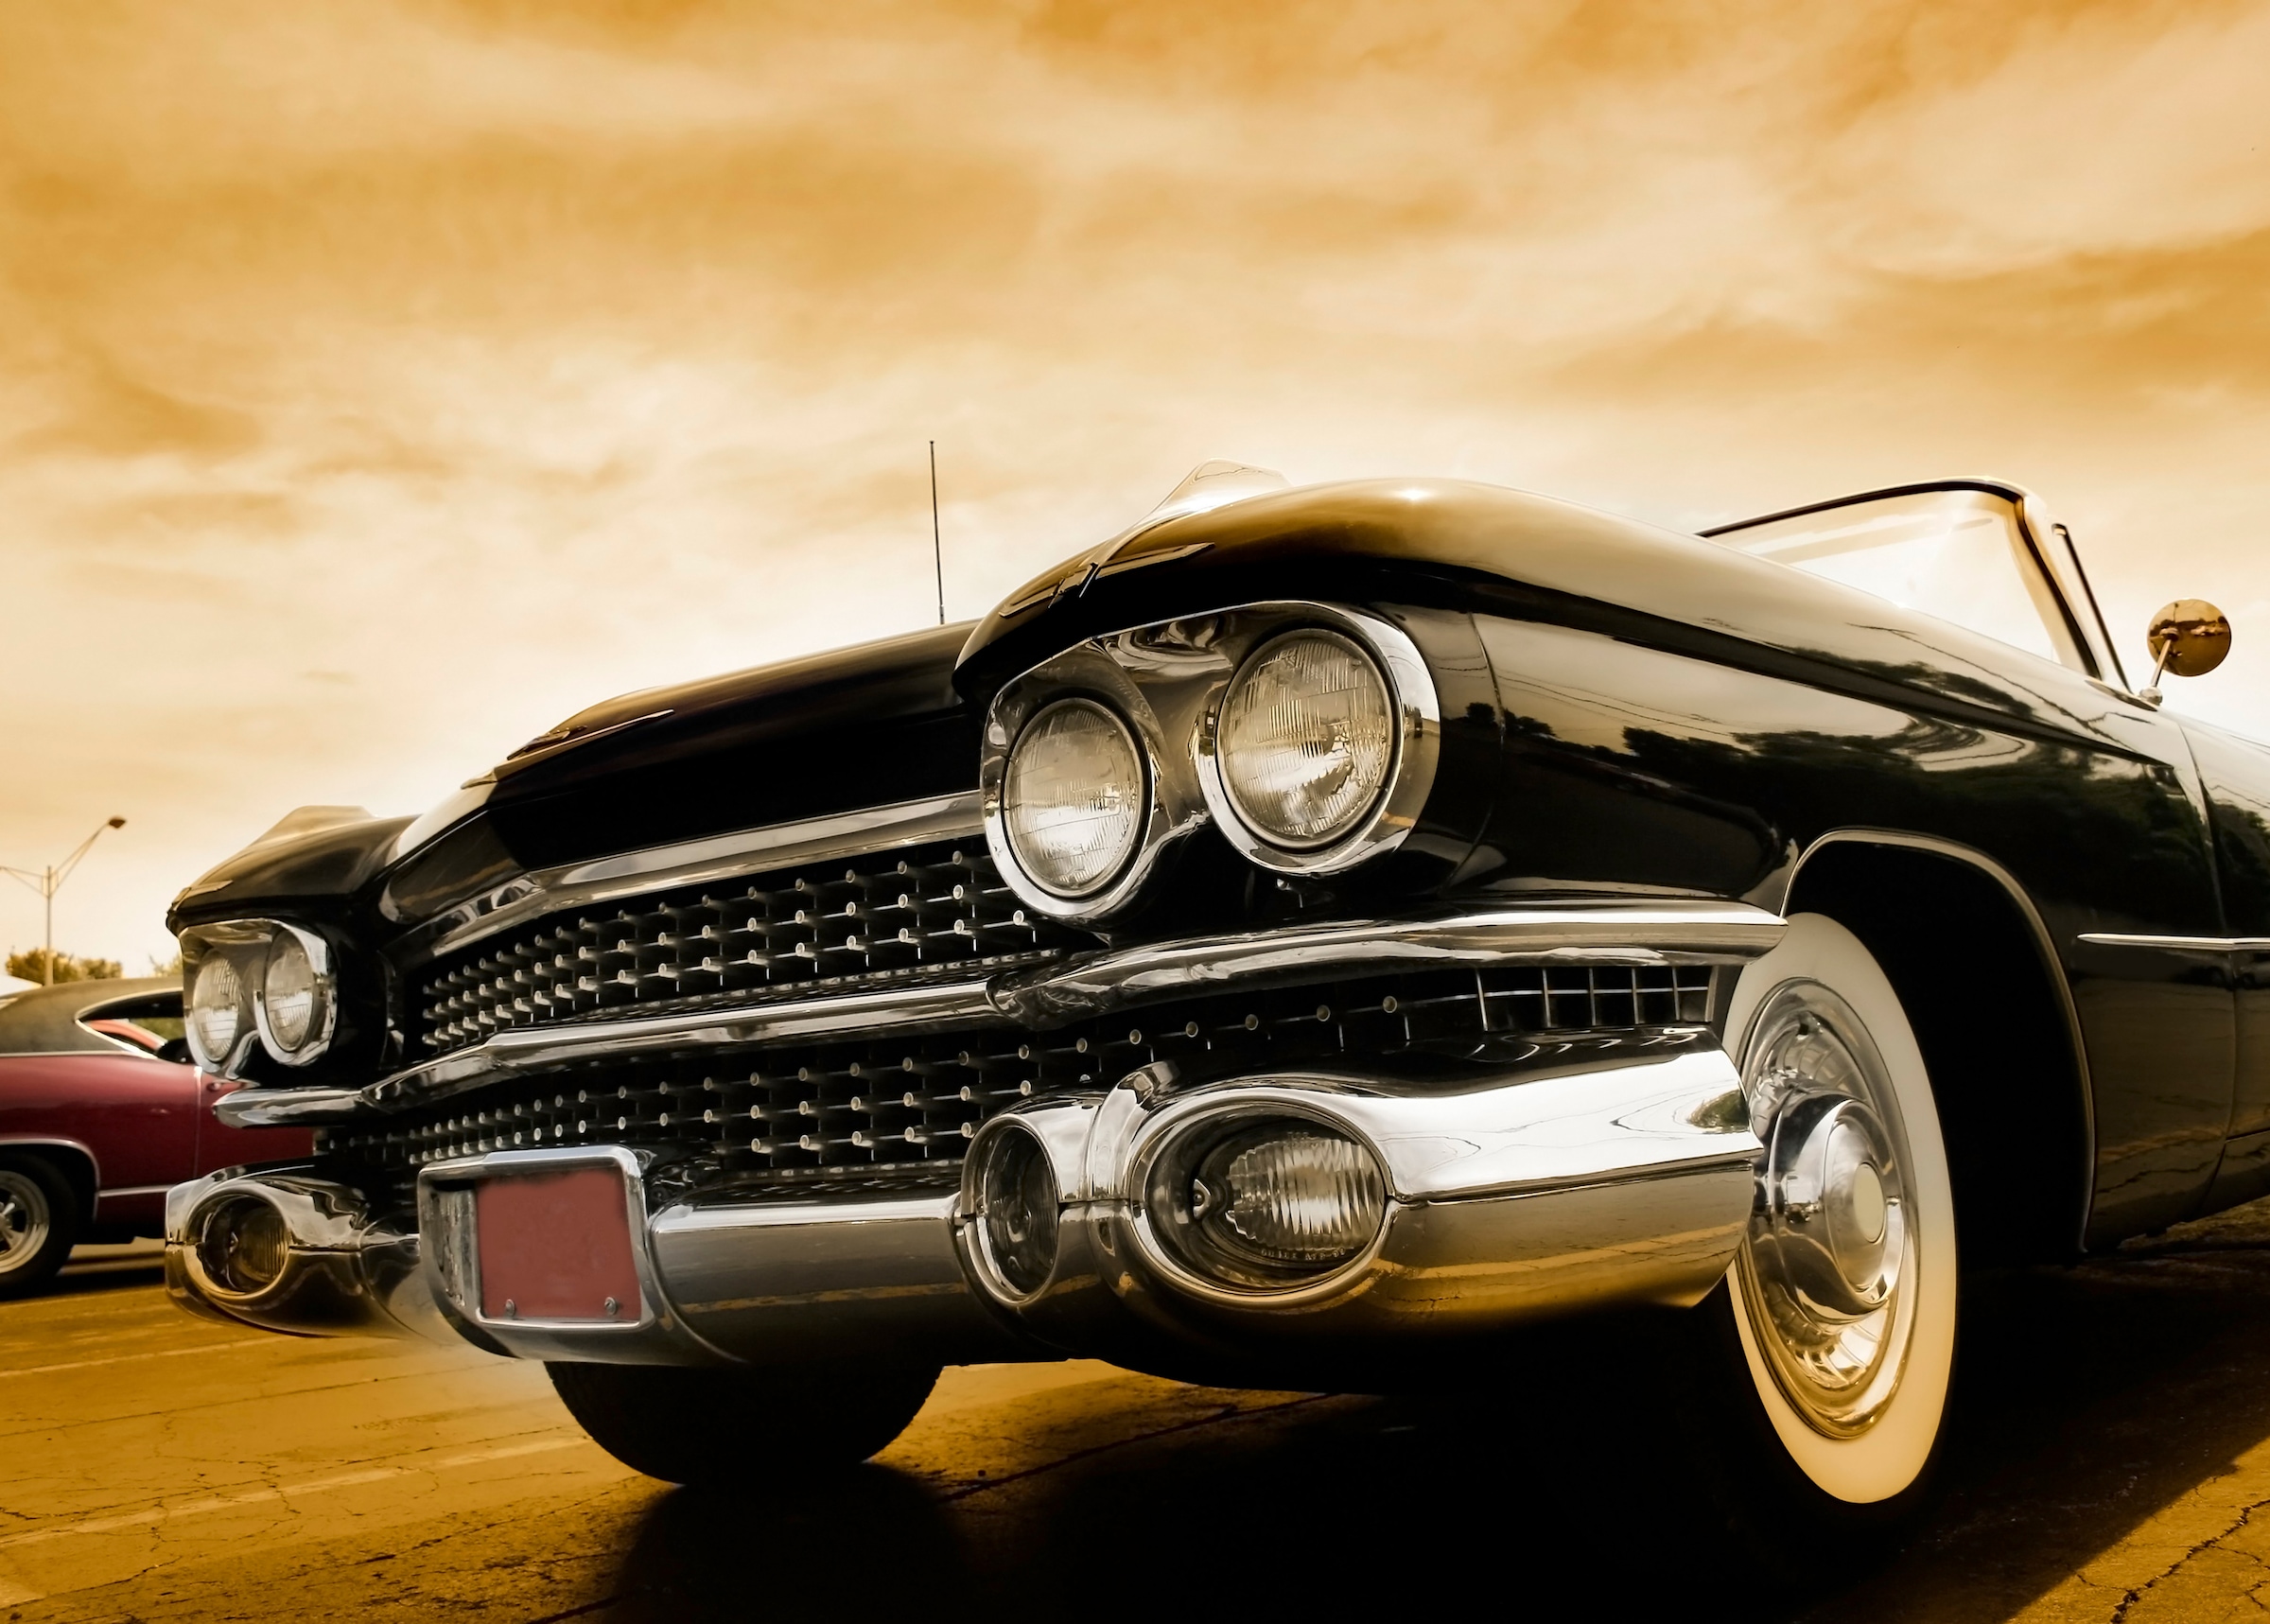 Fototapete »Classic Cars«